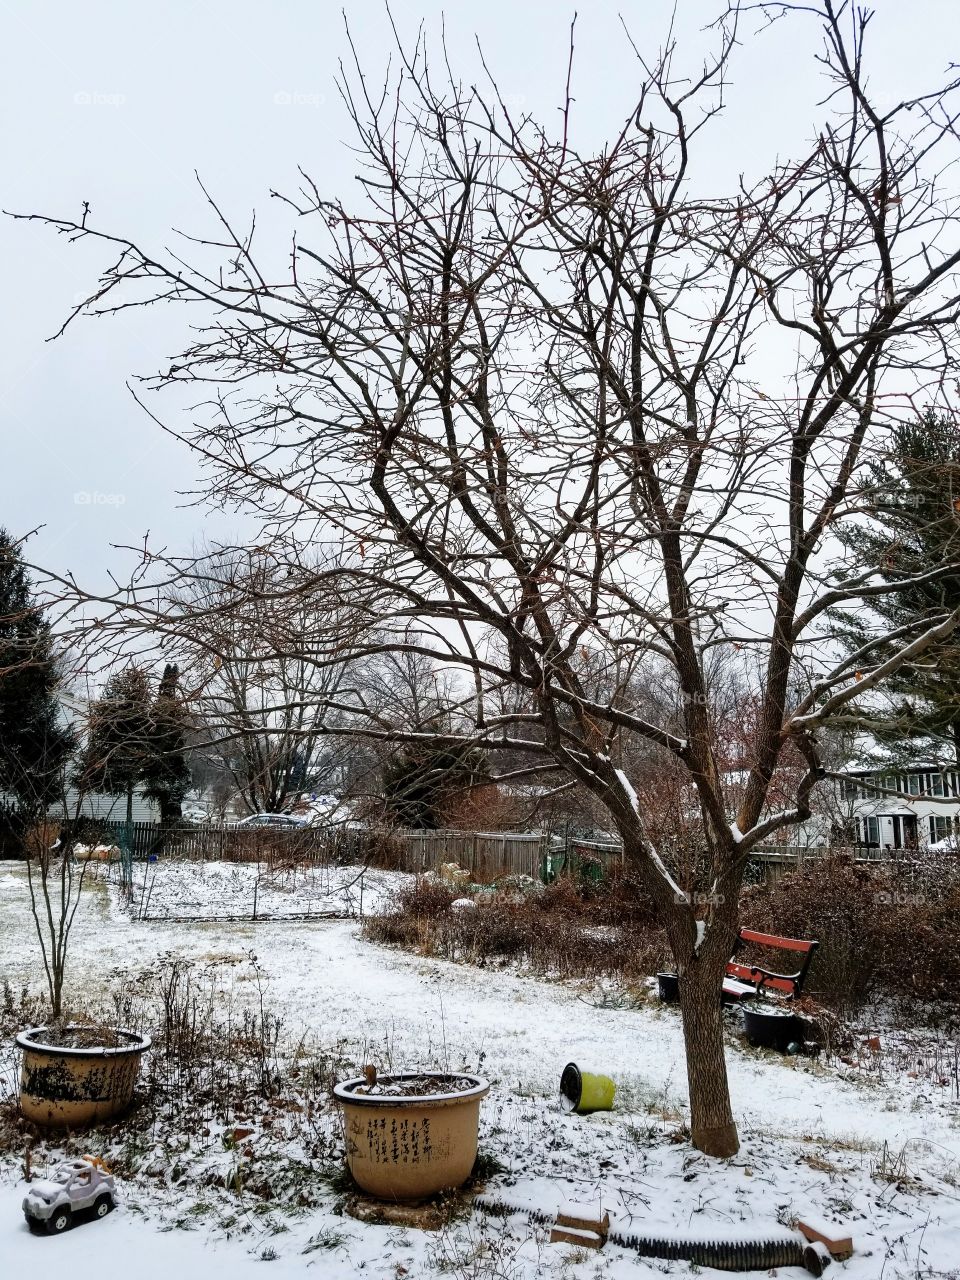 Snowy backyard in Maryland, December 2017